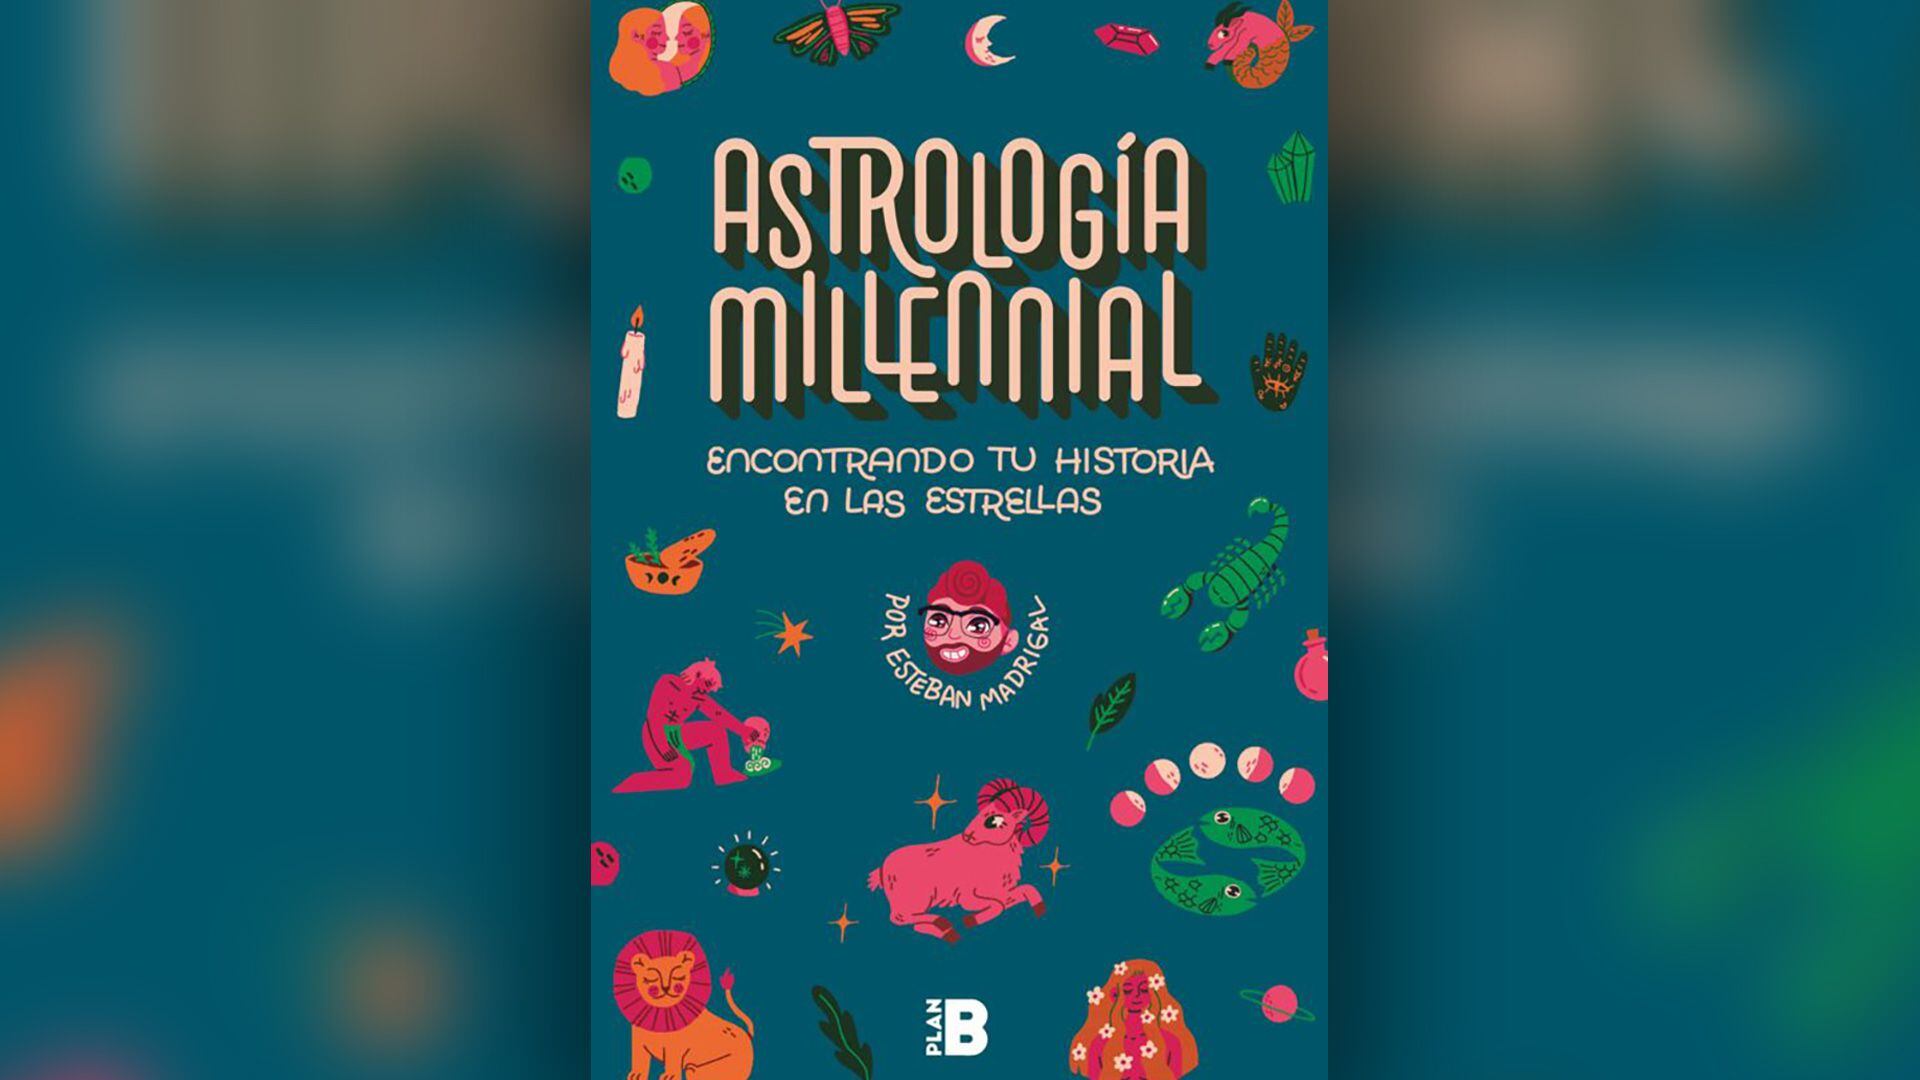 Portada del libro “Astrología millennial” de Esteban Madrigal